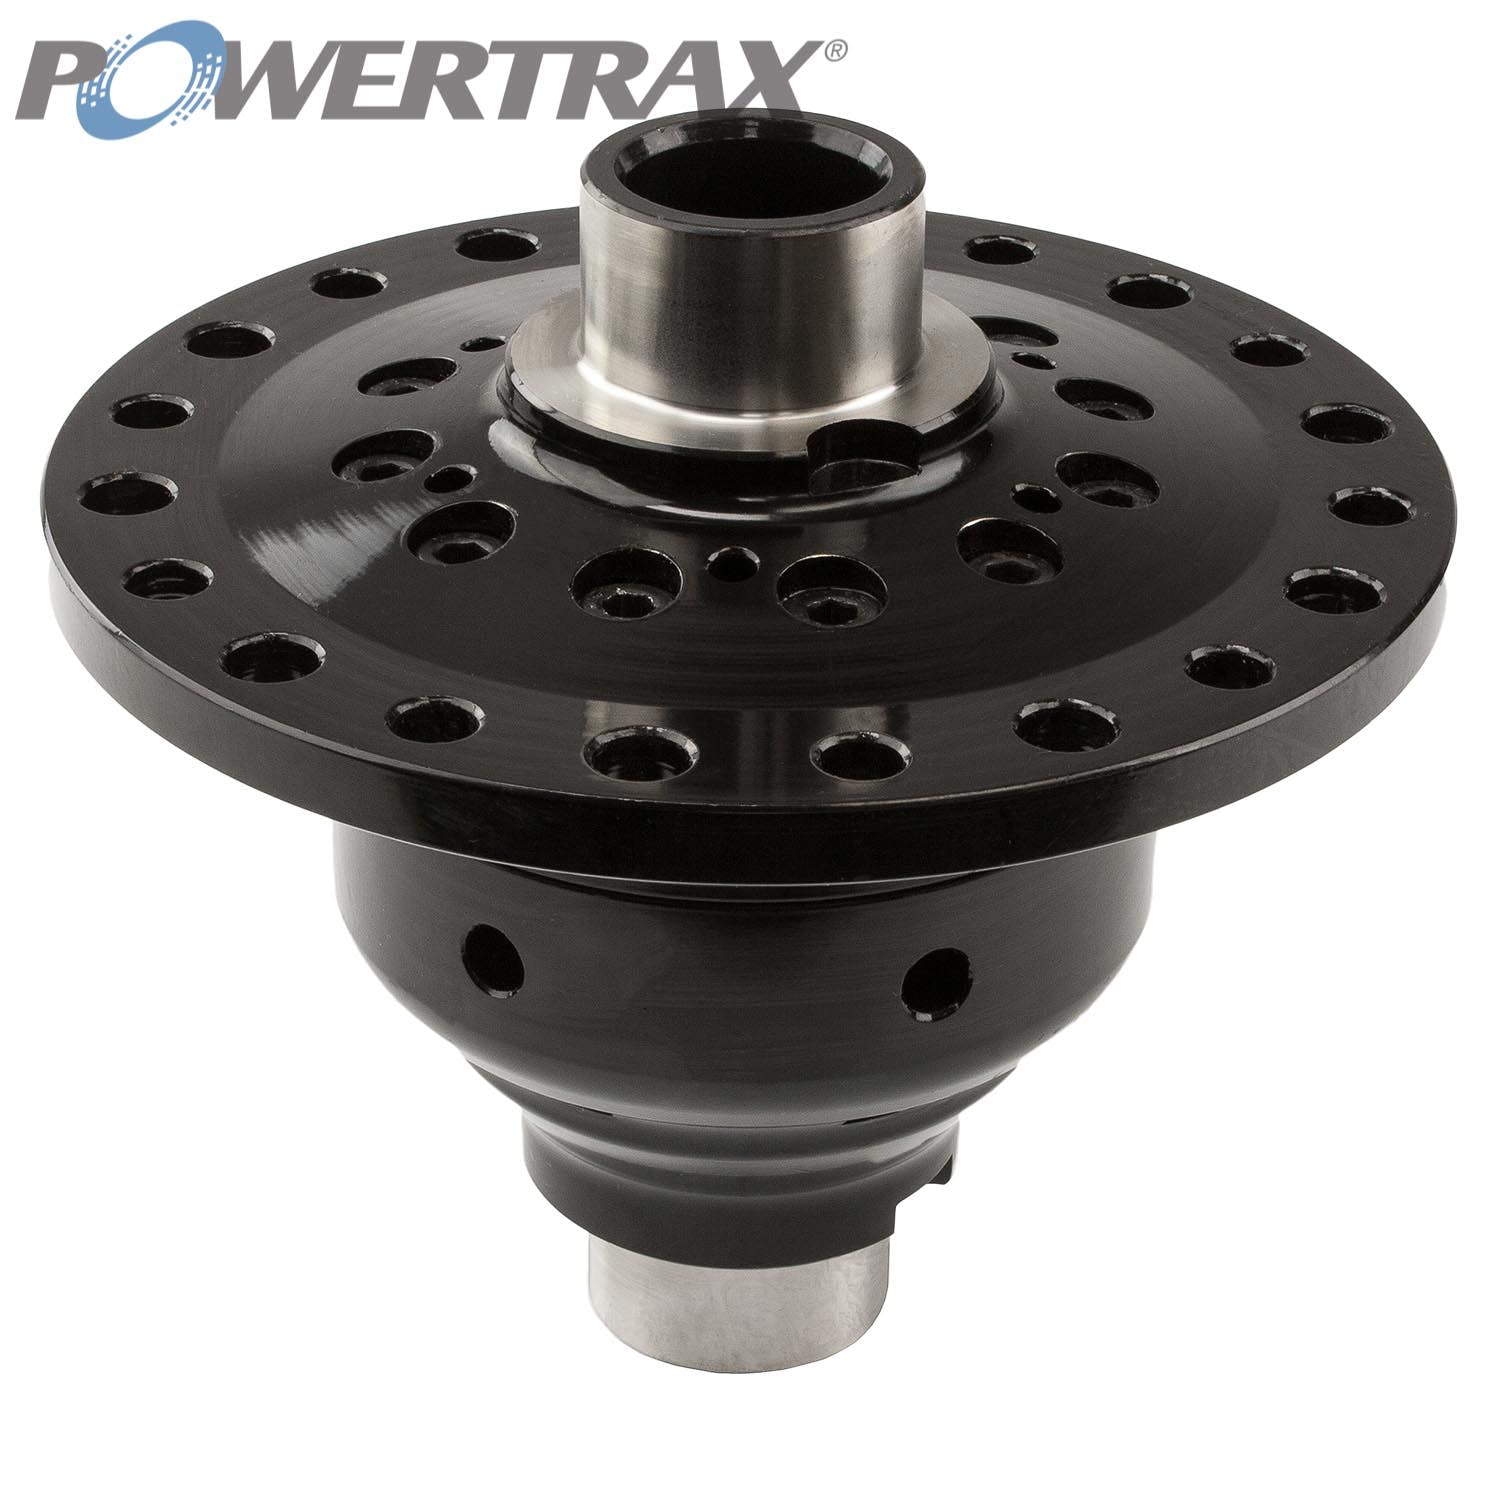 PowerTrax GT434430 Powertrax - Grip PRO Traction System